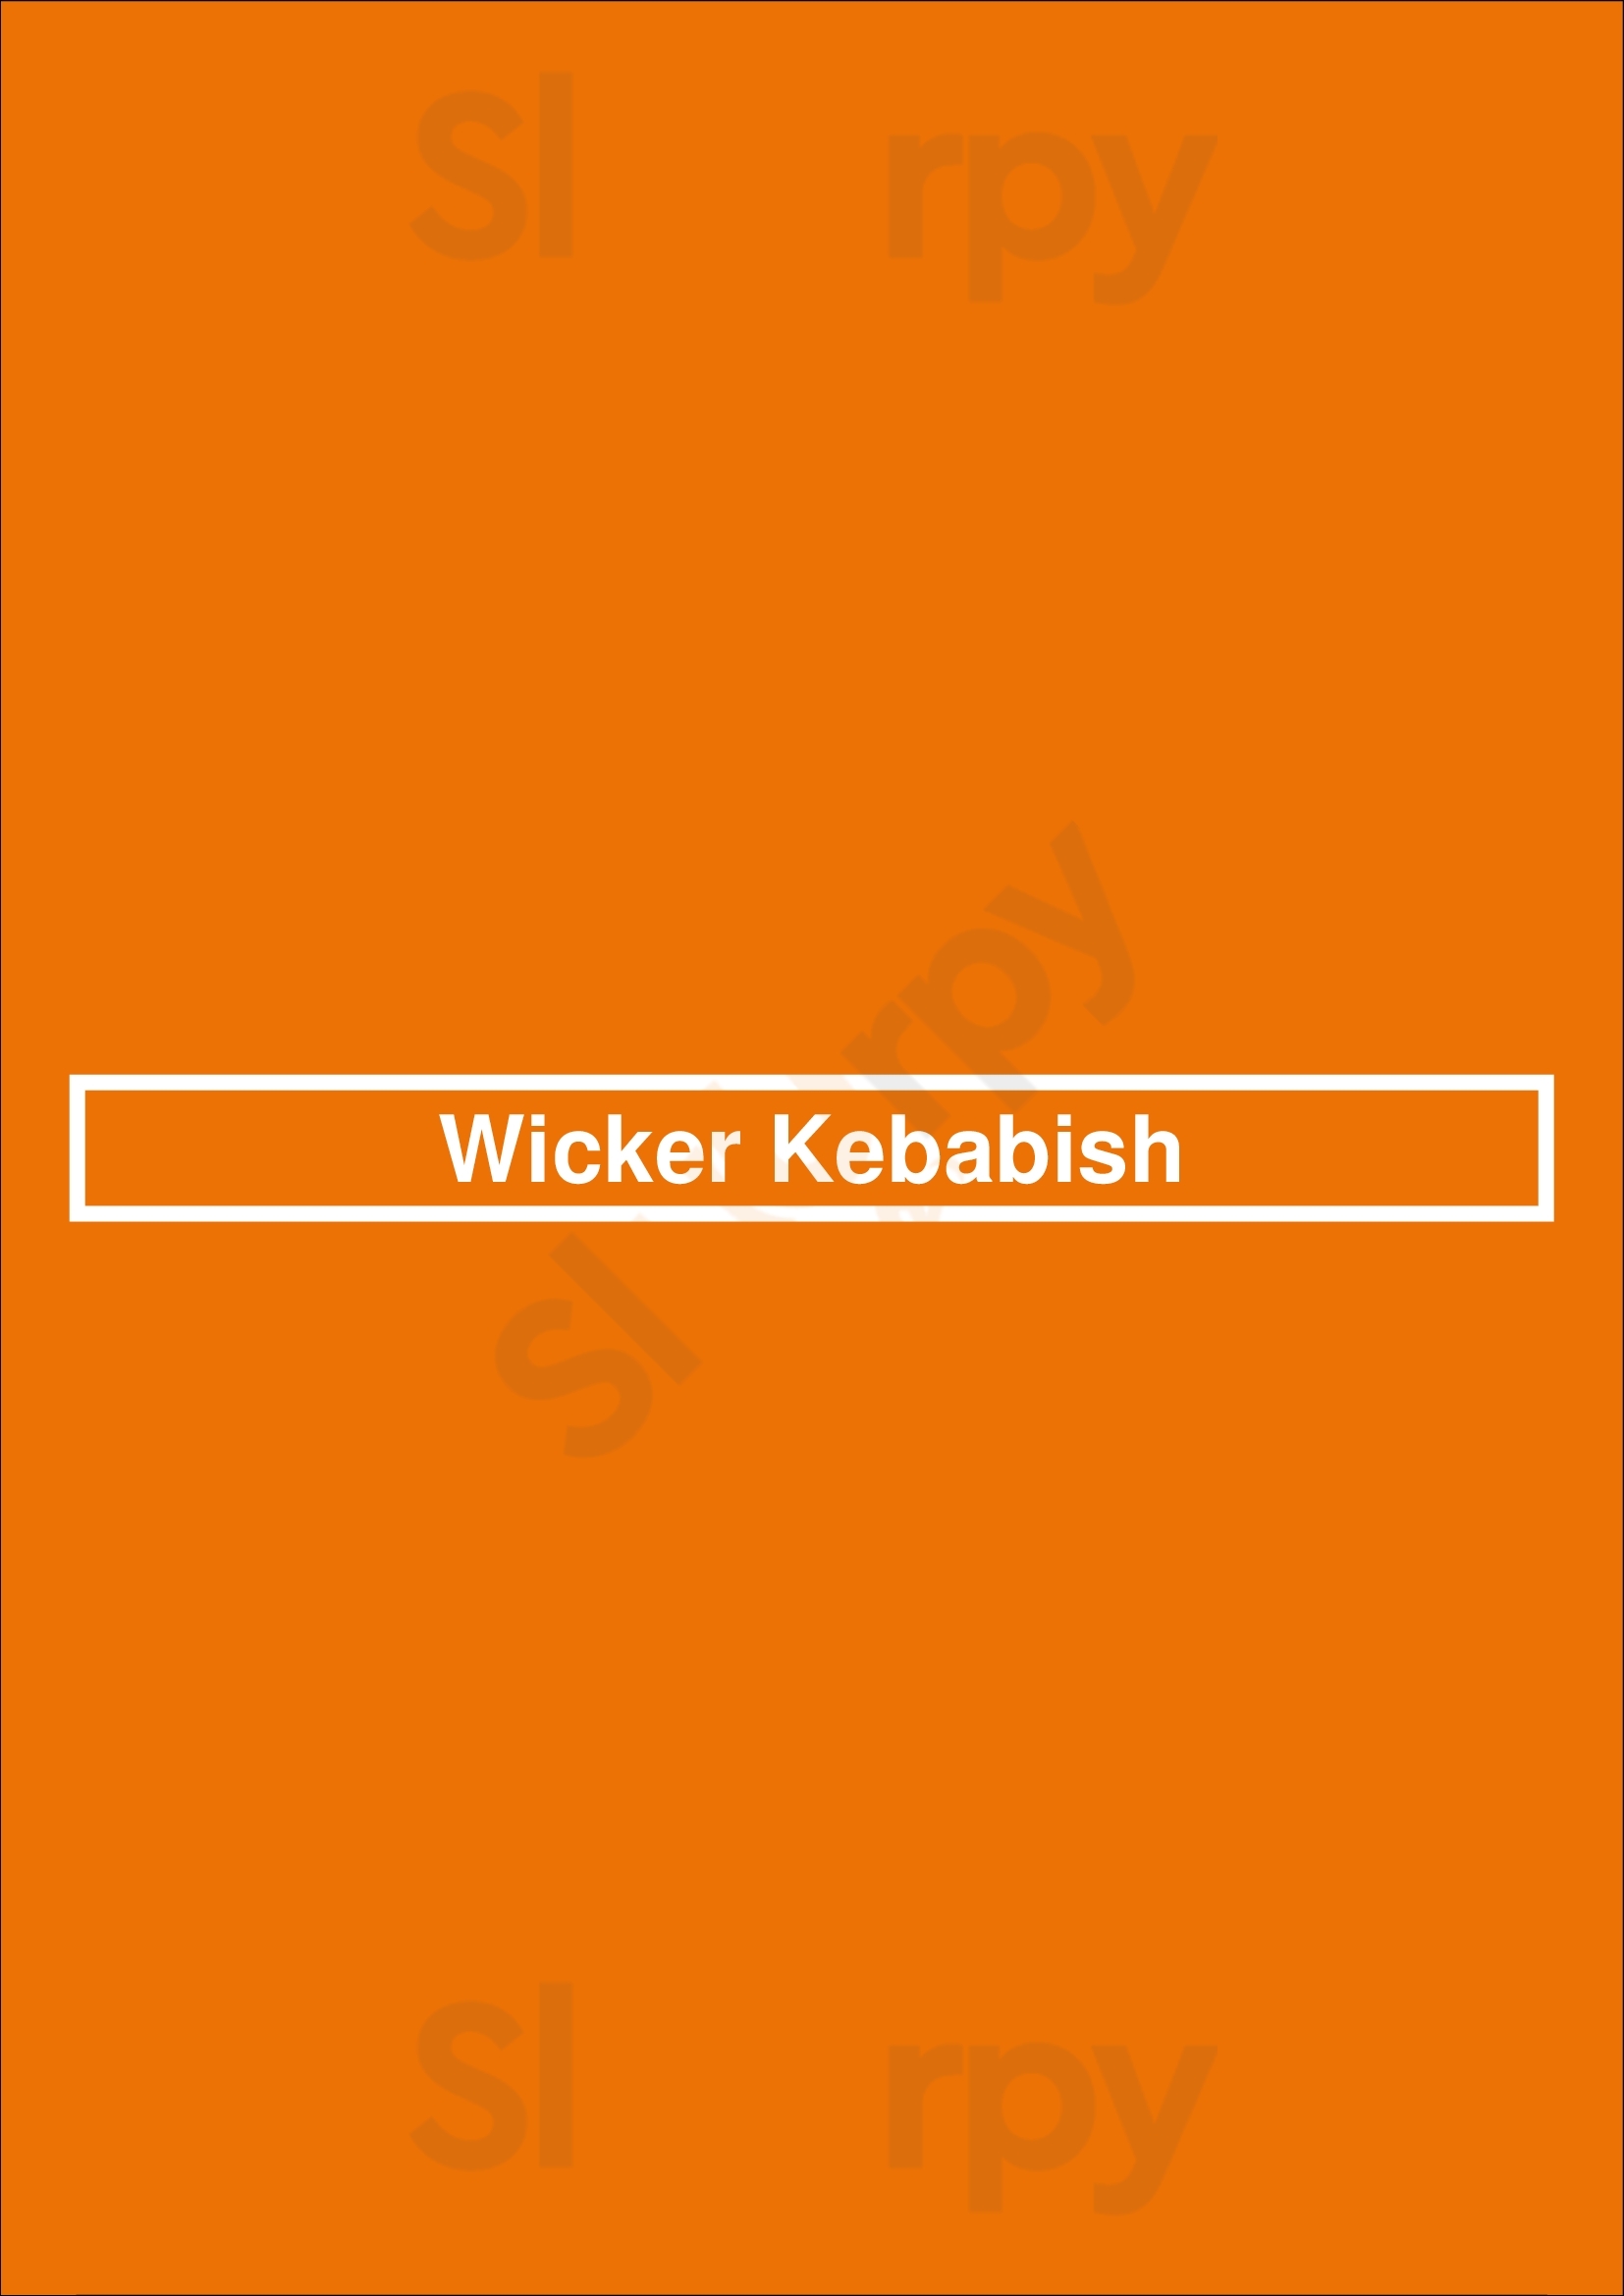 Wicker Kebabish Sheffield Menu - 1